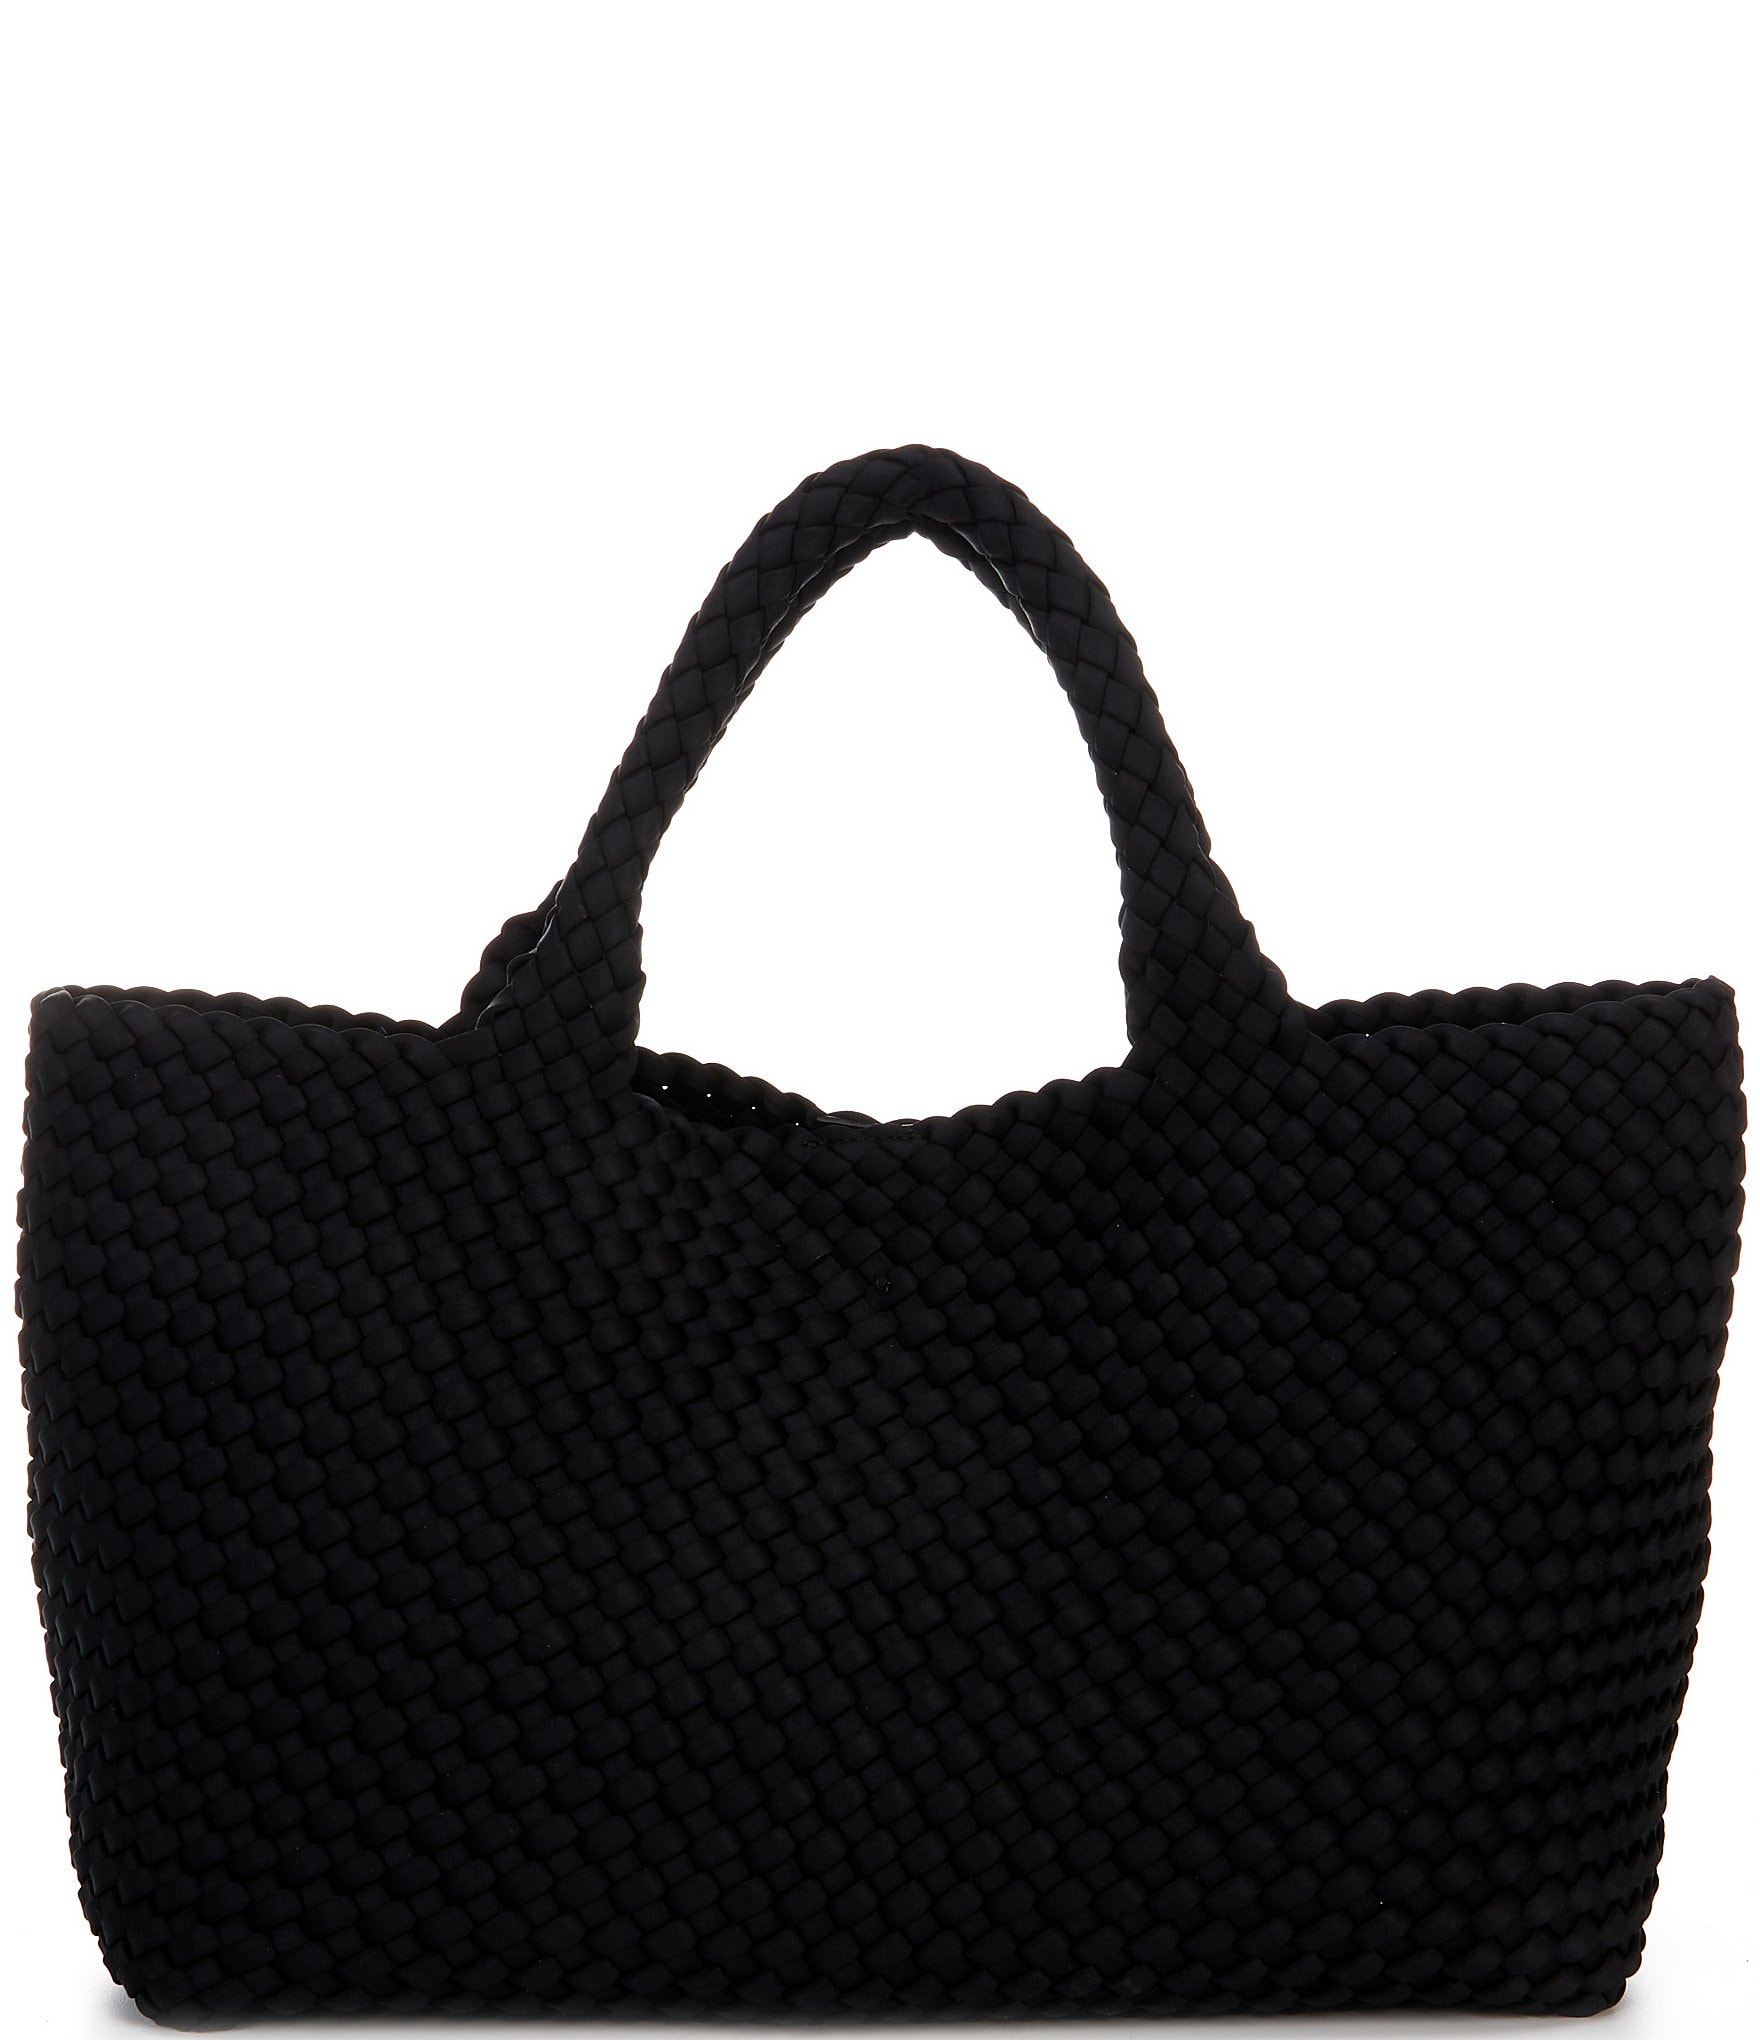 Neoprene Woven Tote Bag Black color Large Size Set Intro Price